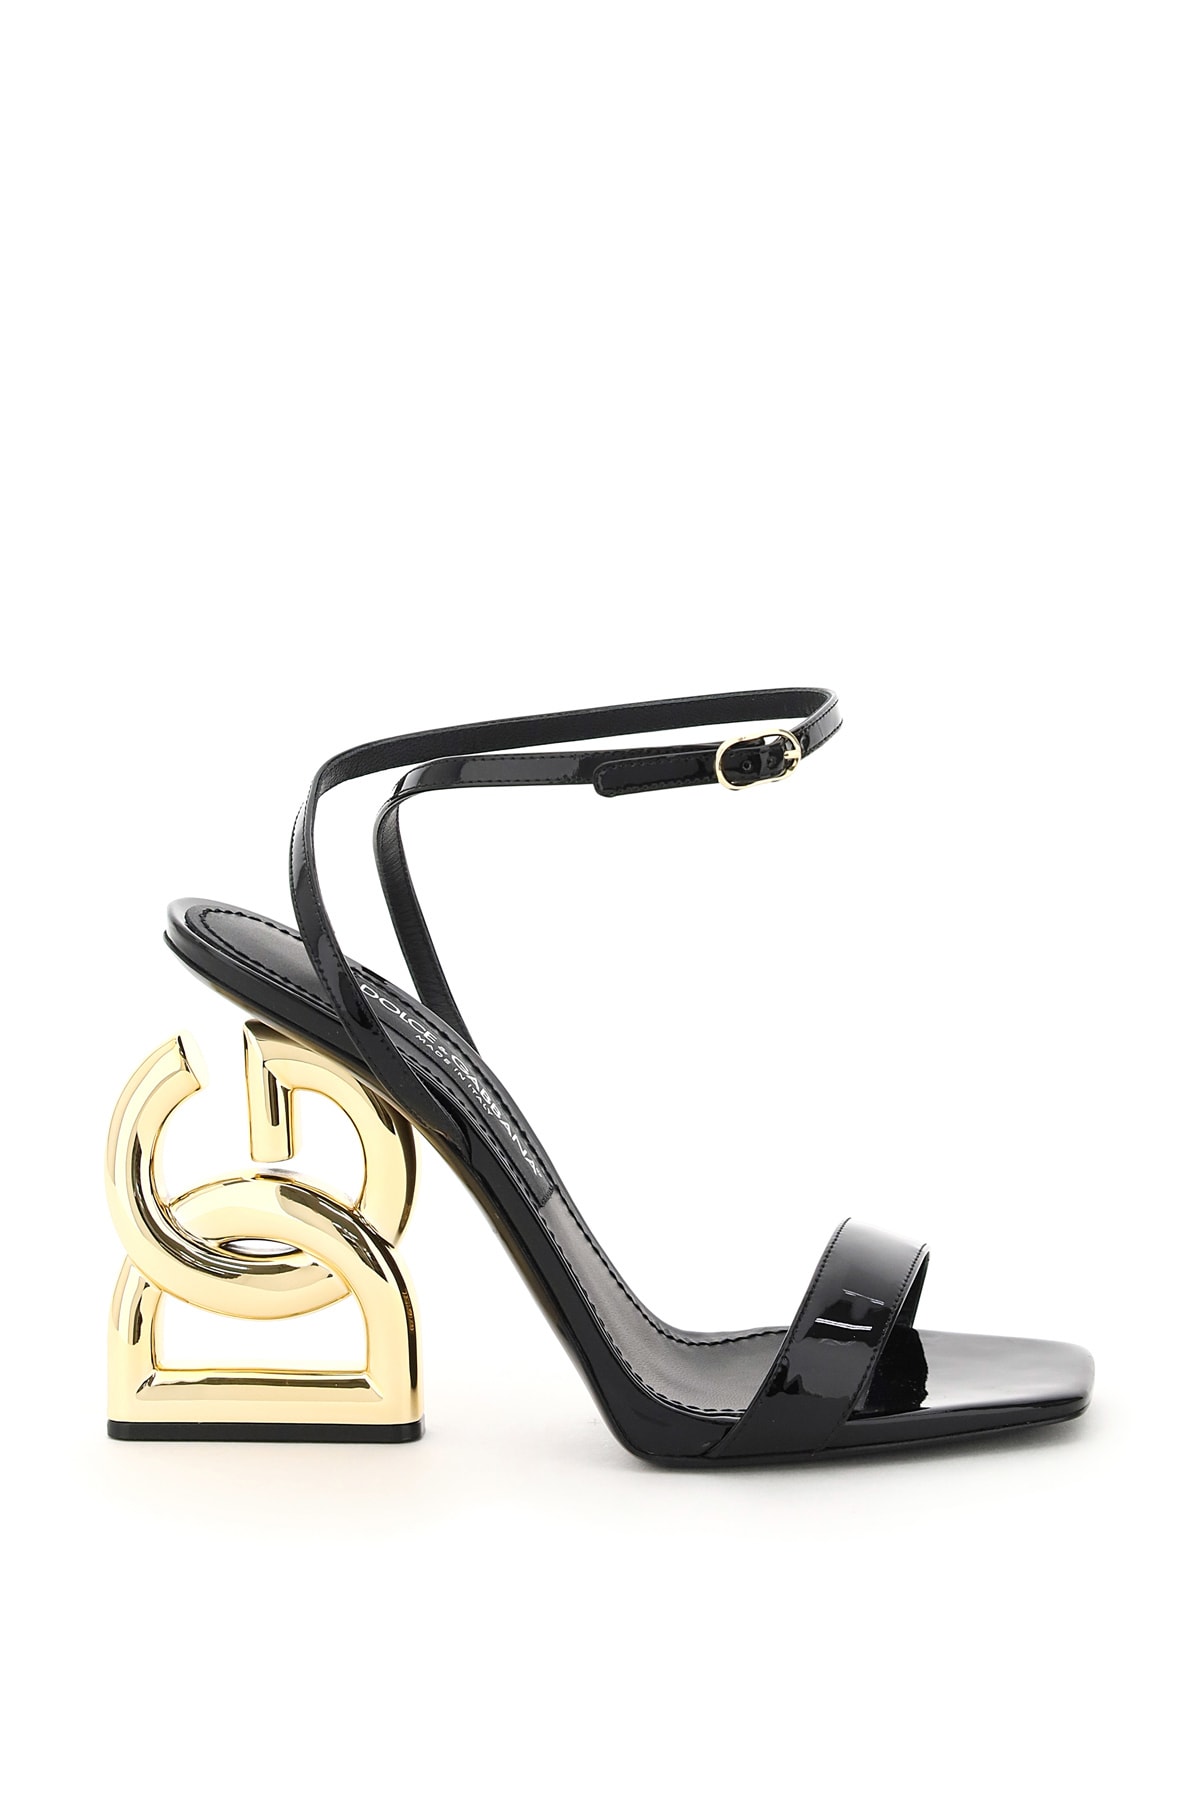 Buy Dolce & Gabbana Dg Pop Heel Sandals online, shop Dolce & Gabbana shoes with free shipping